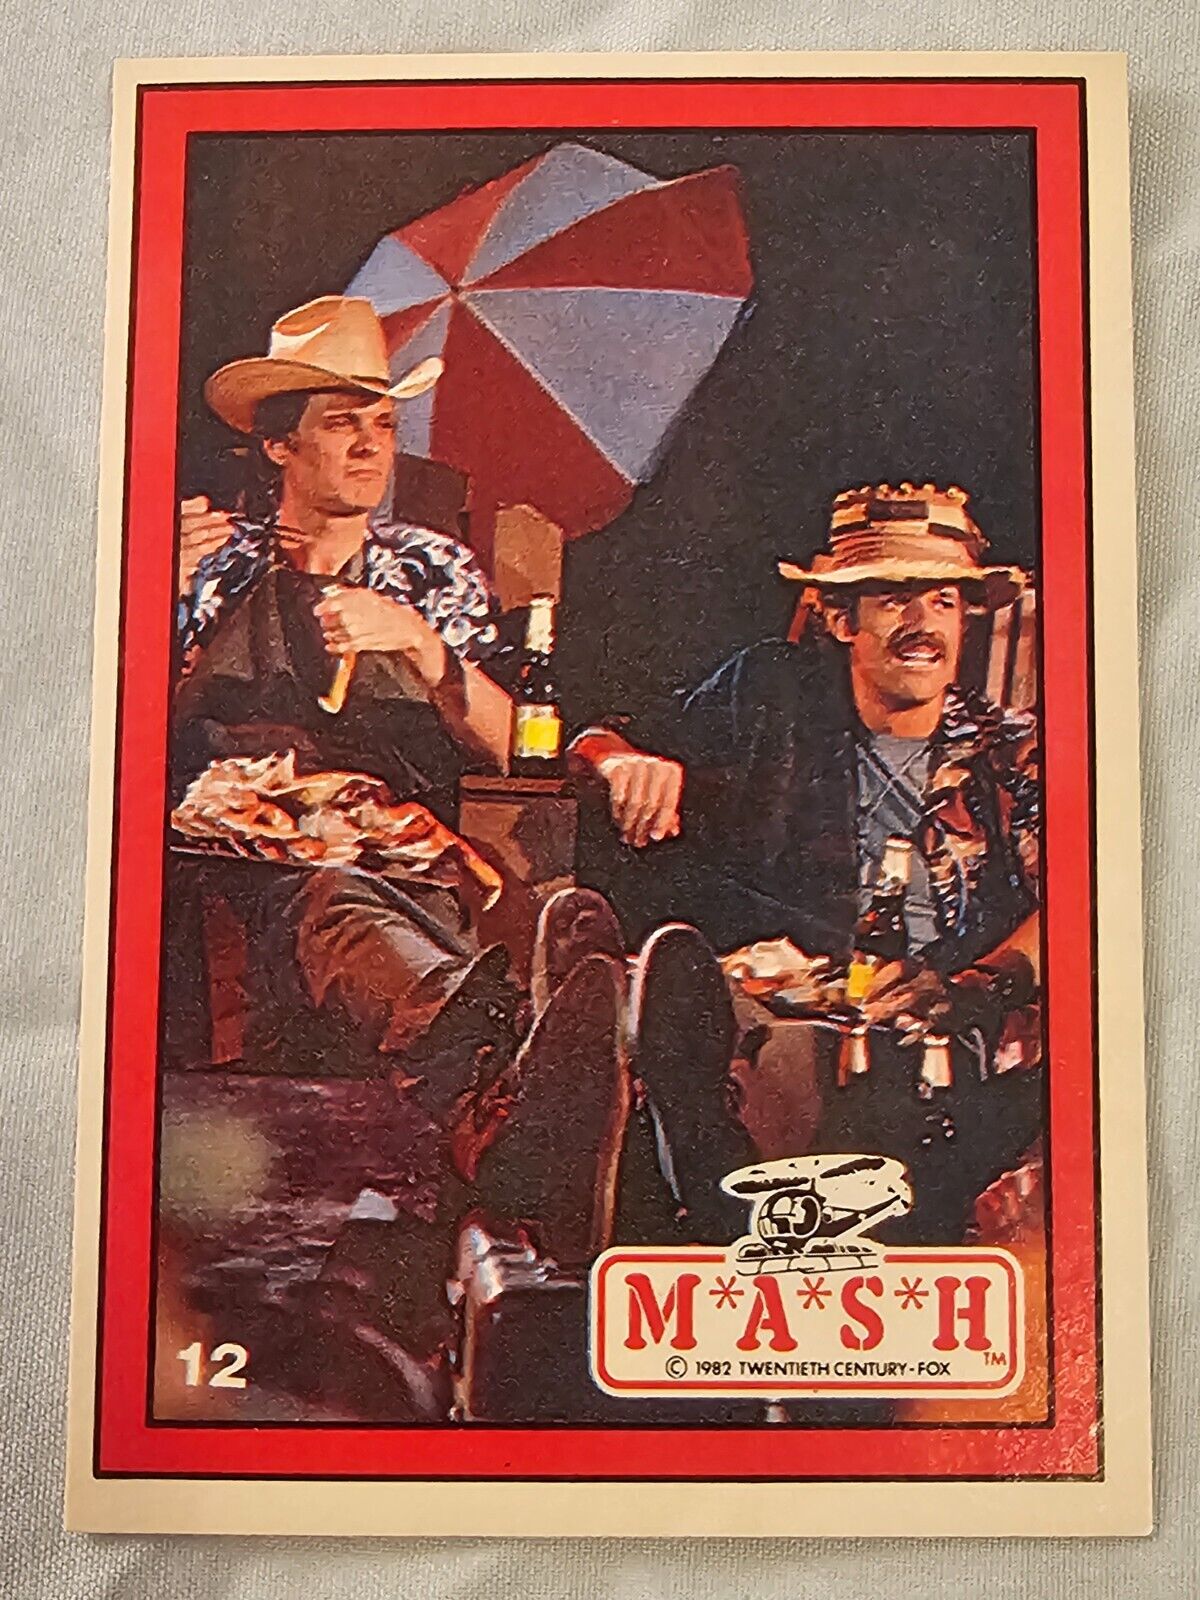 1982 Donruss MASH Trading Card #12